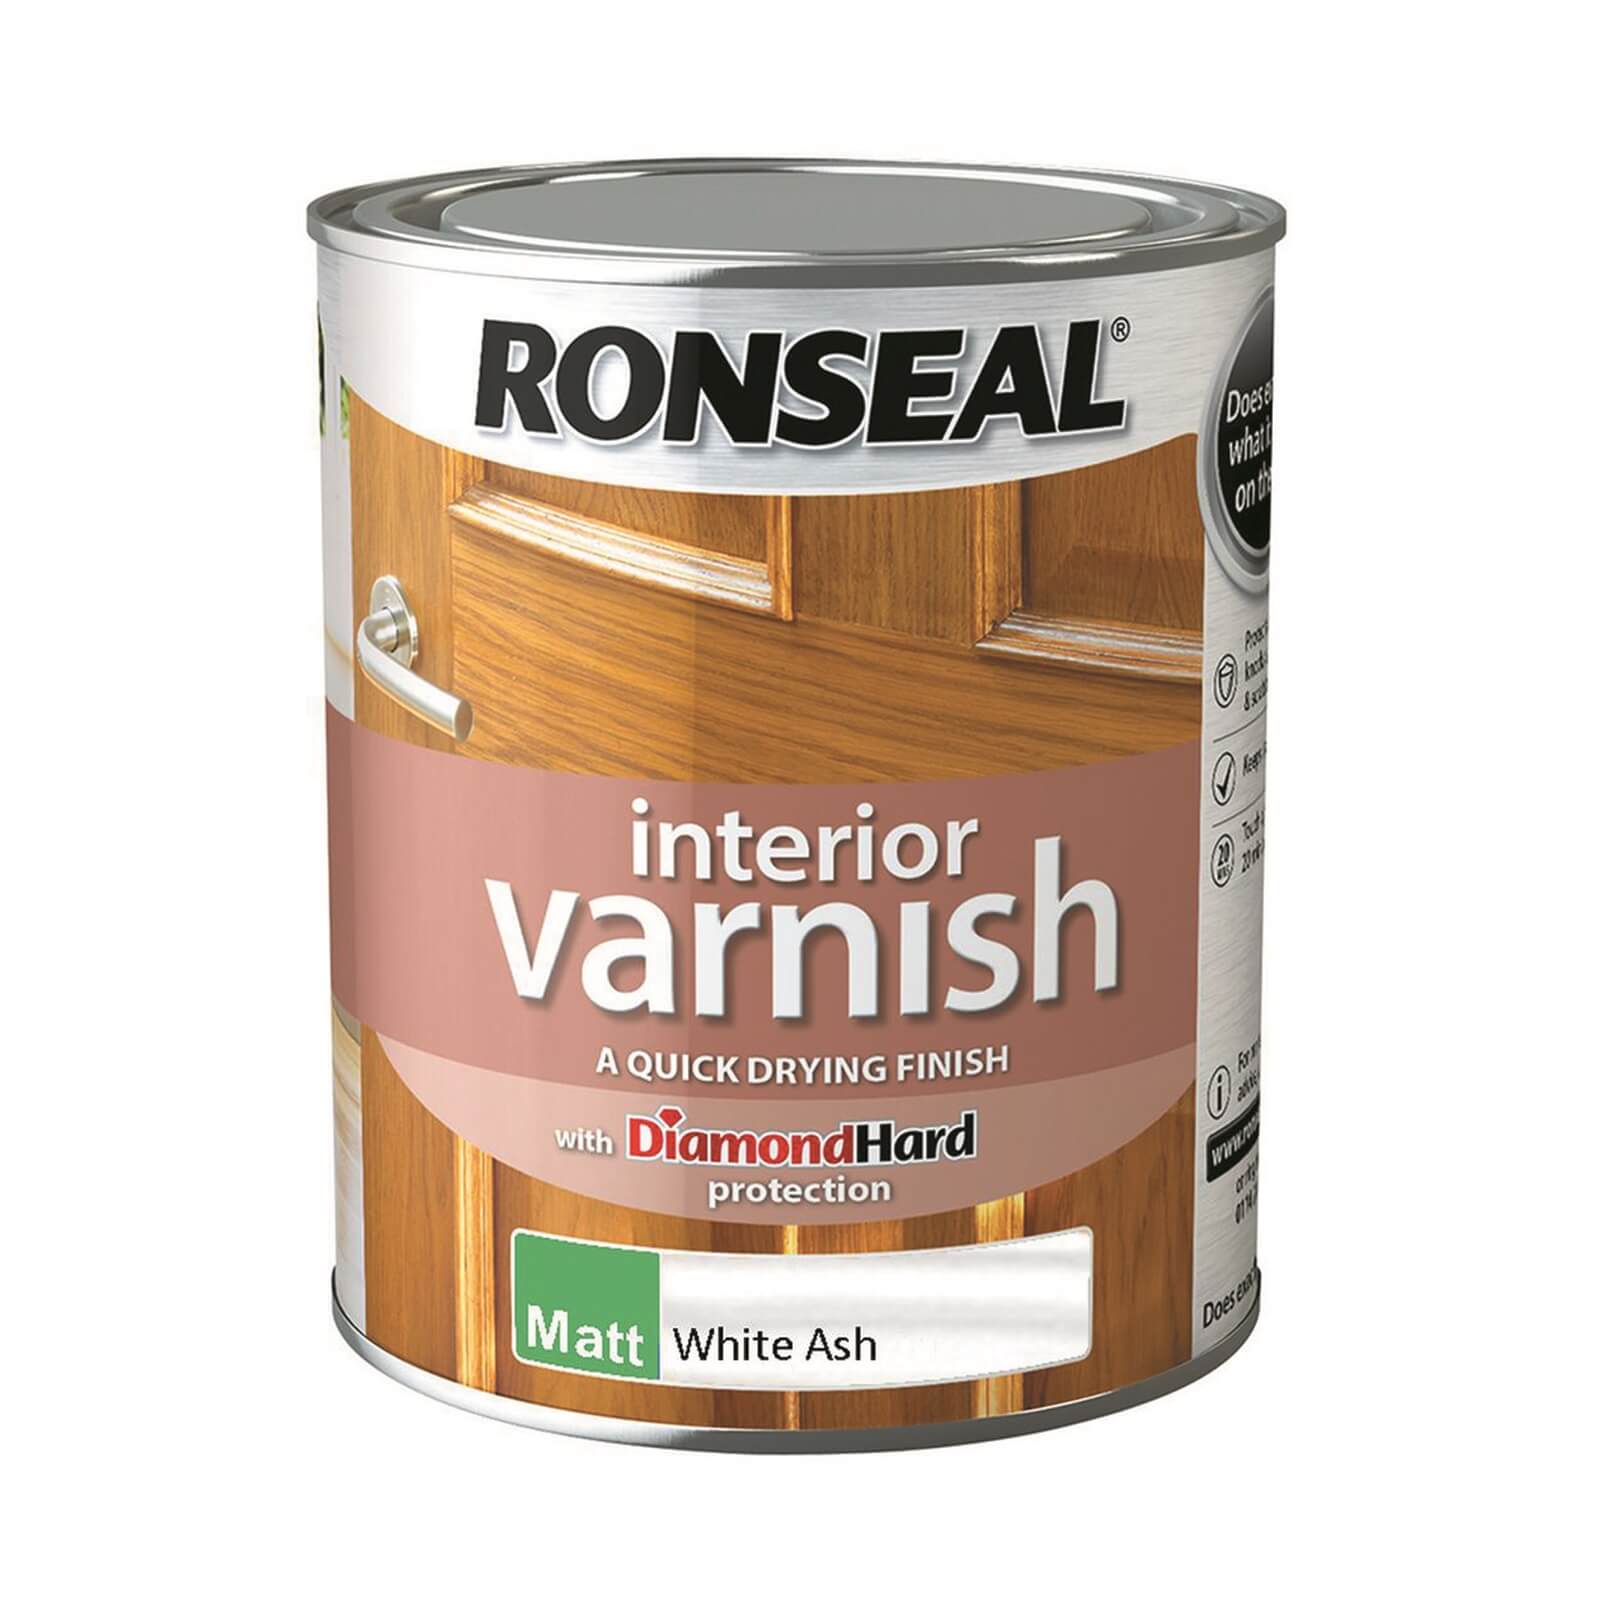 Ronseal Interior Varnish Matt White Ash - 750ml